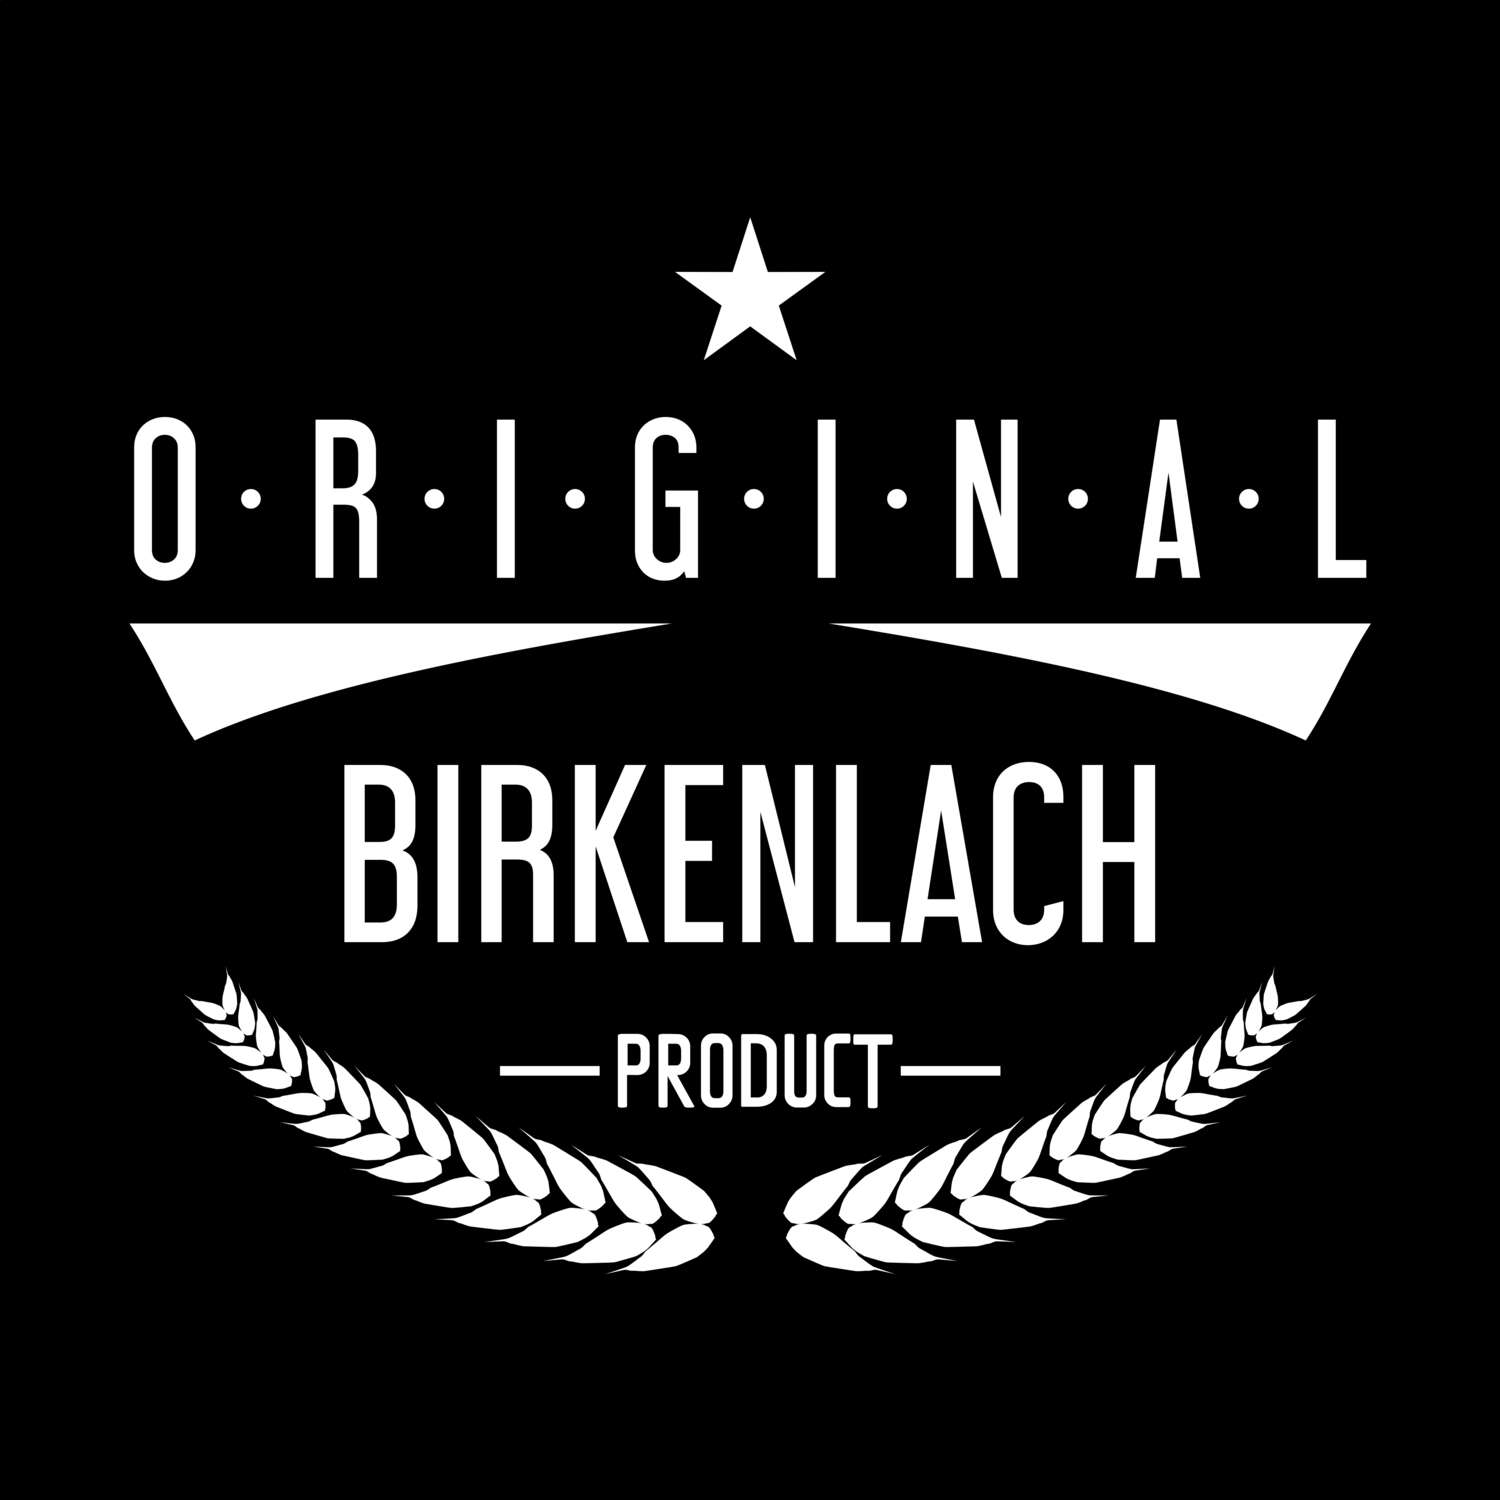 Birkenlach T-Shirt »Original Product«